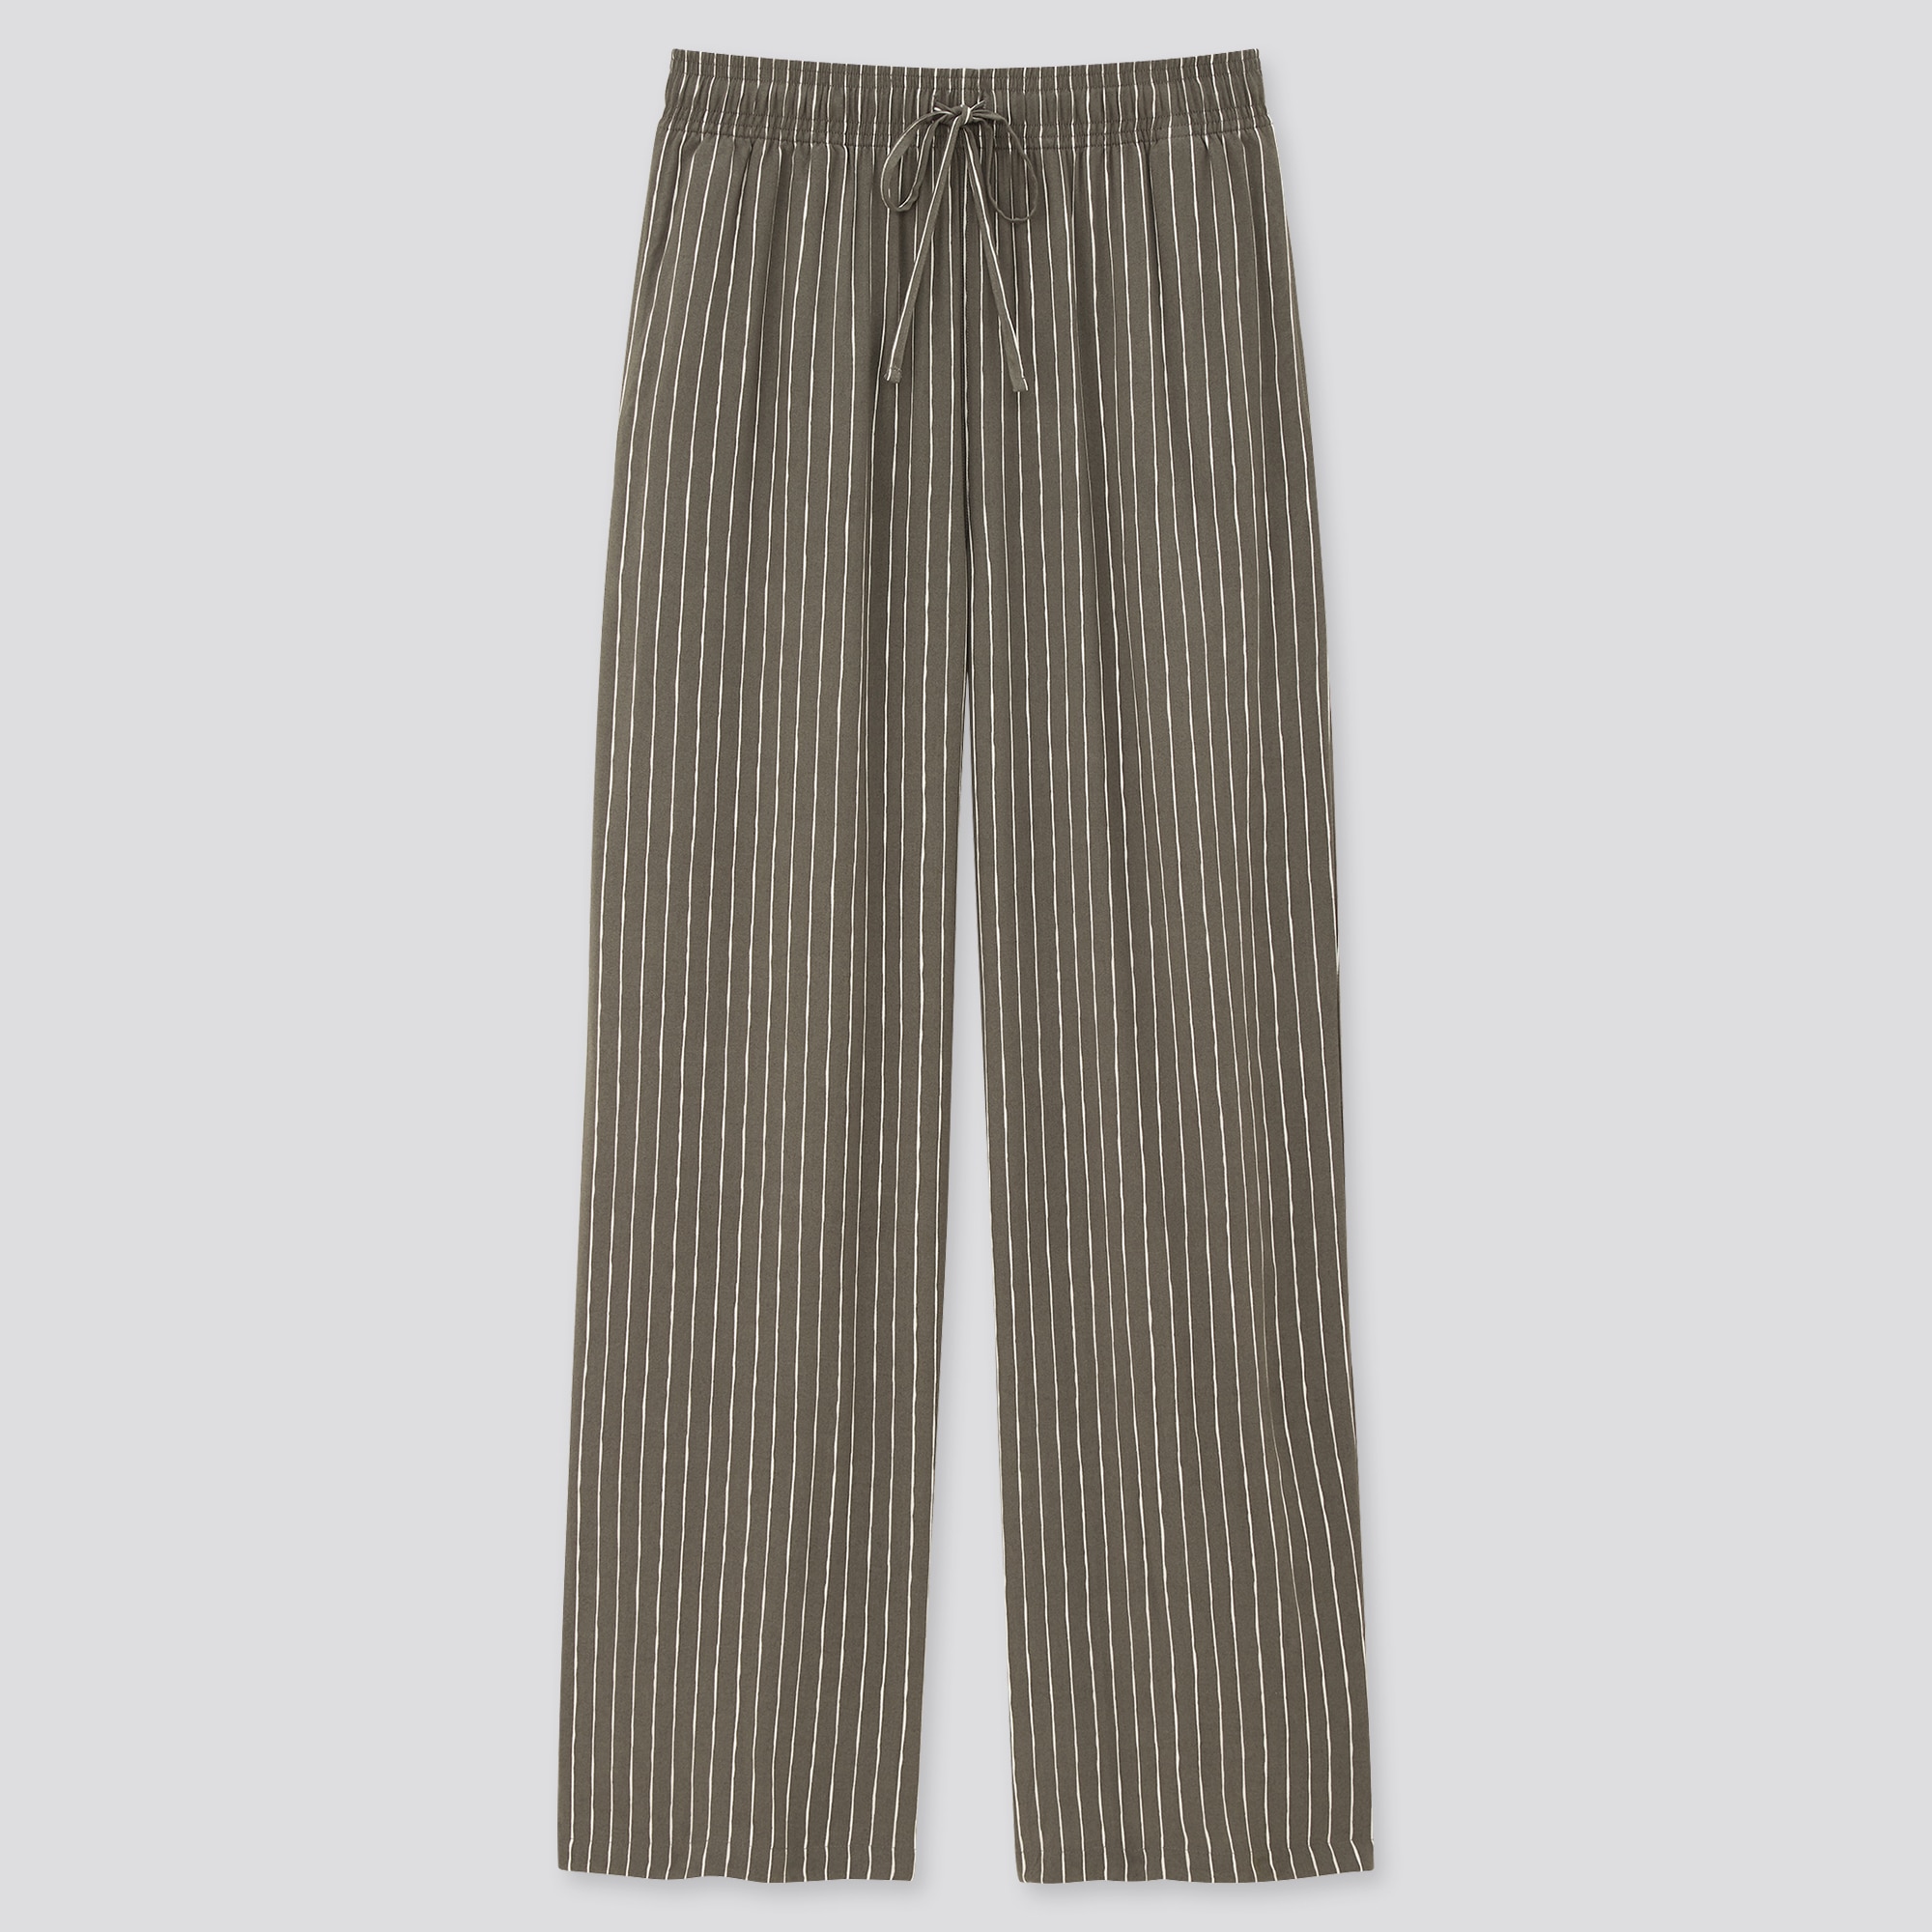 Drape Straight Pants (Striped)